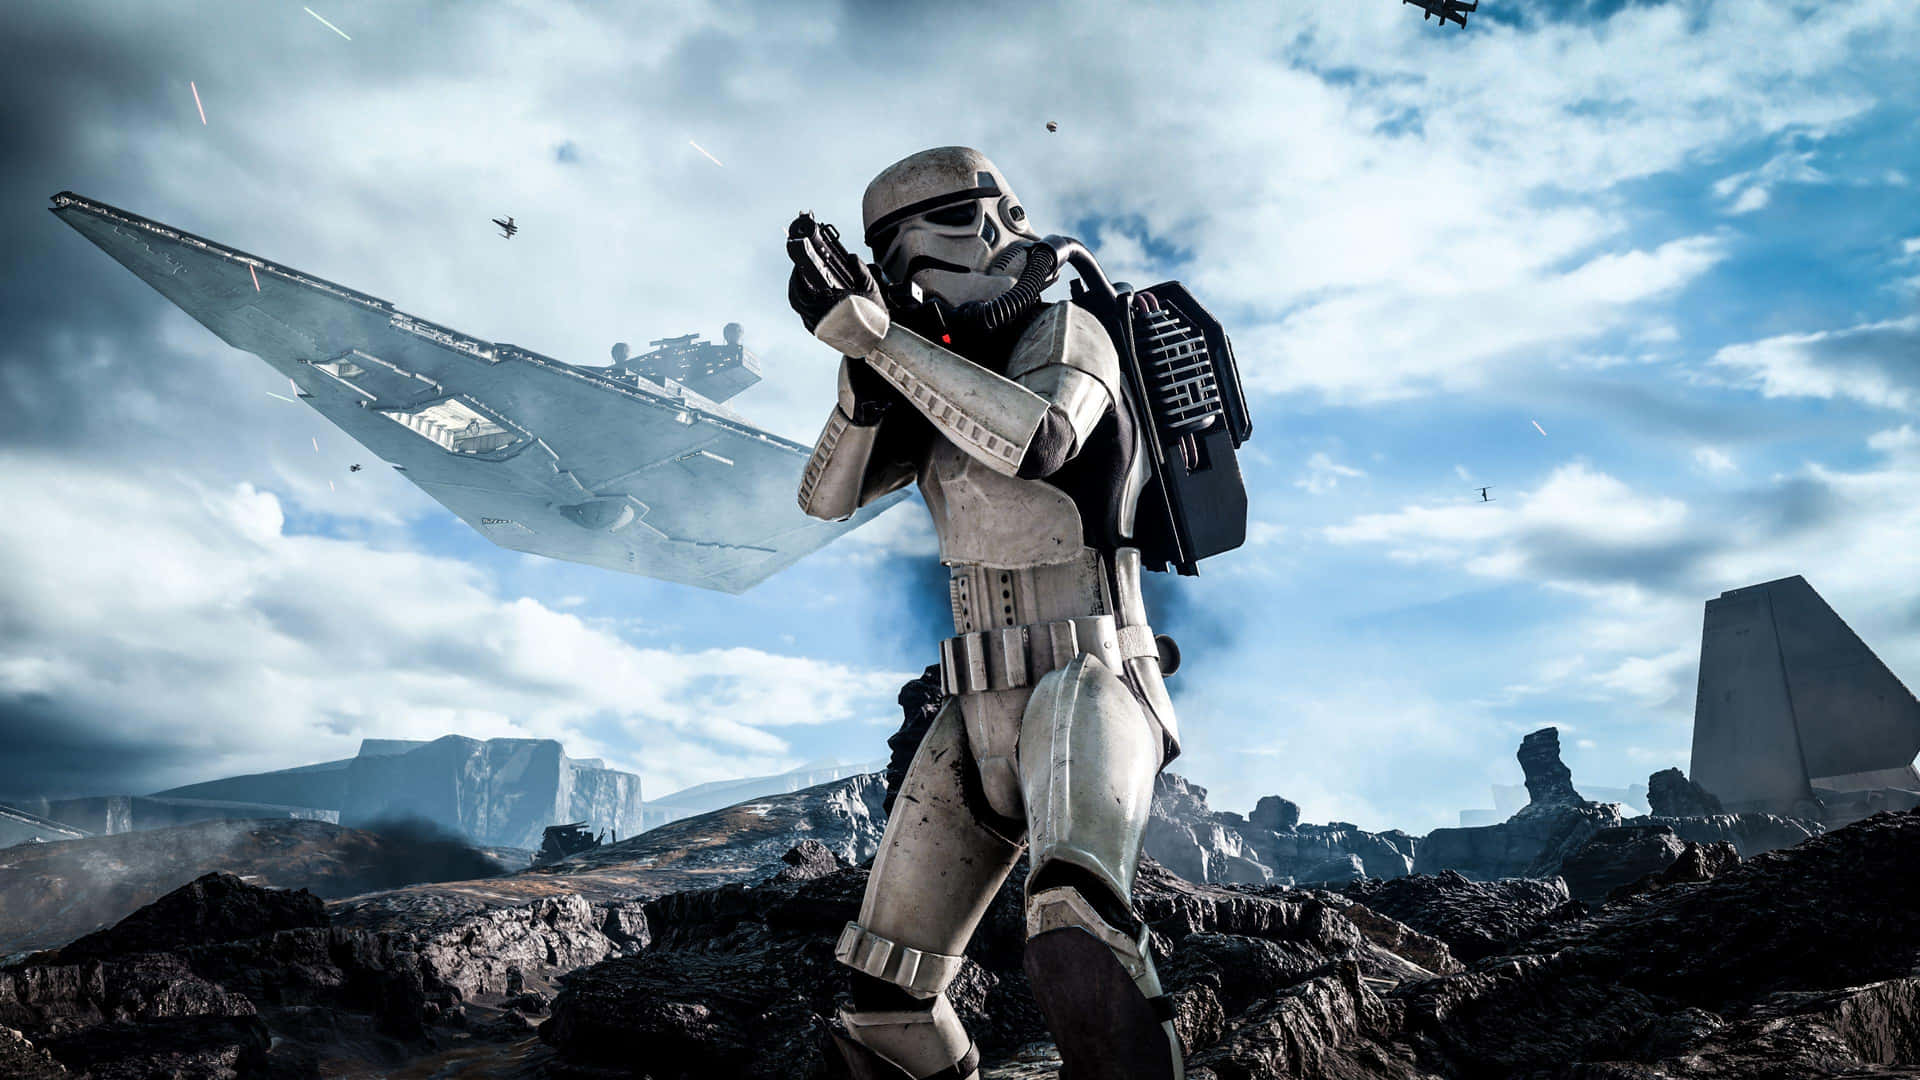 Starwars Stormtrooper Som Håller En Pistol Som Bakgrundsbild.